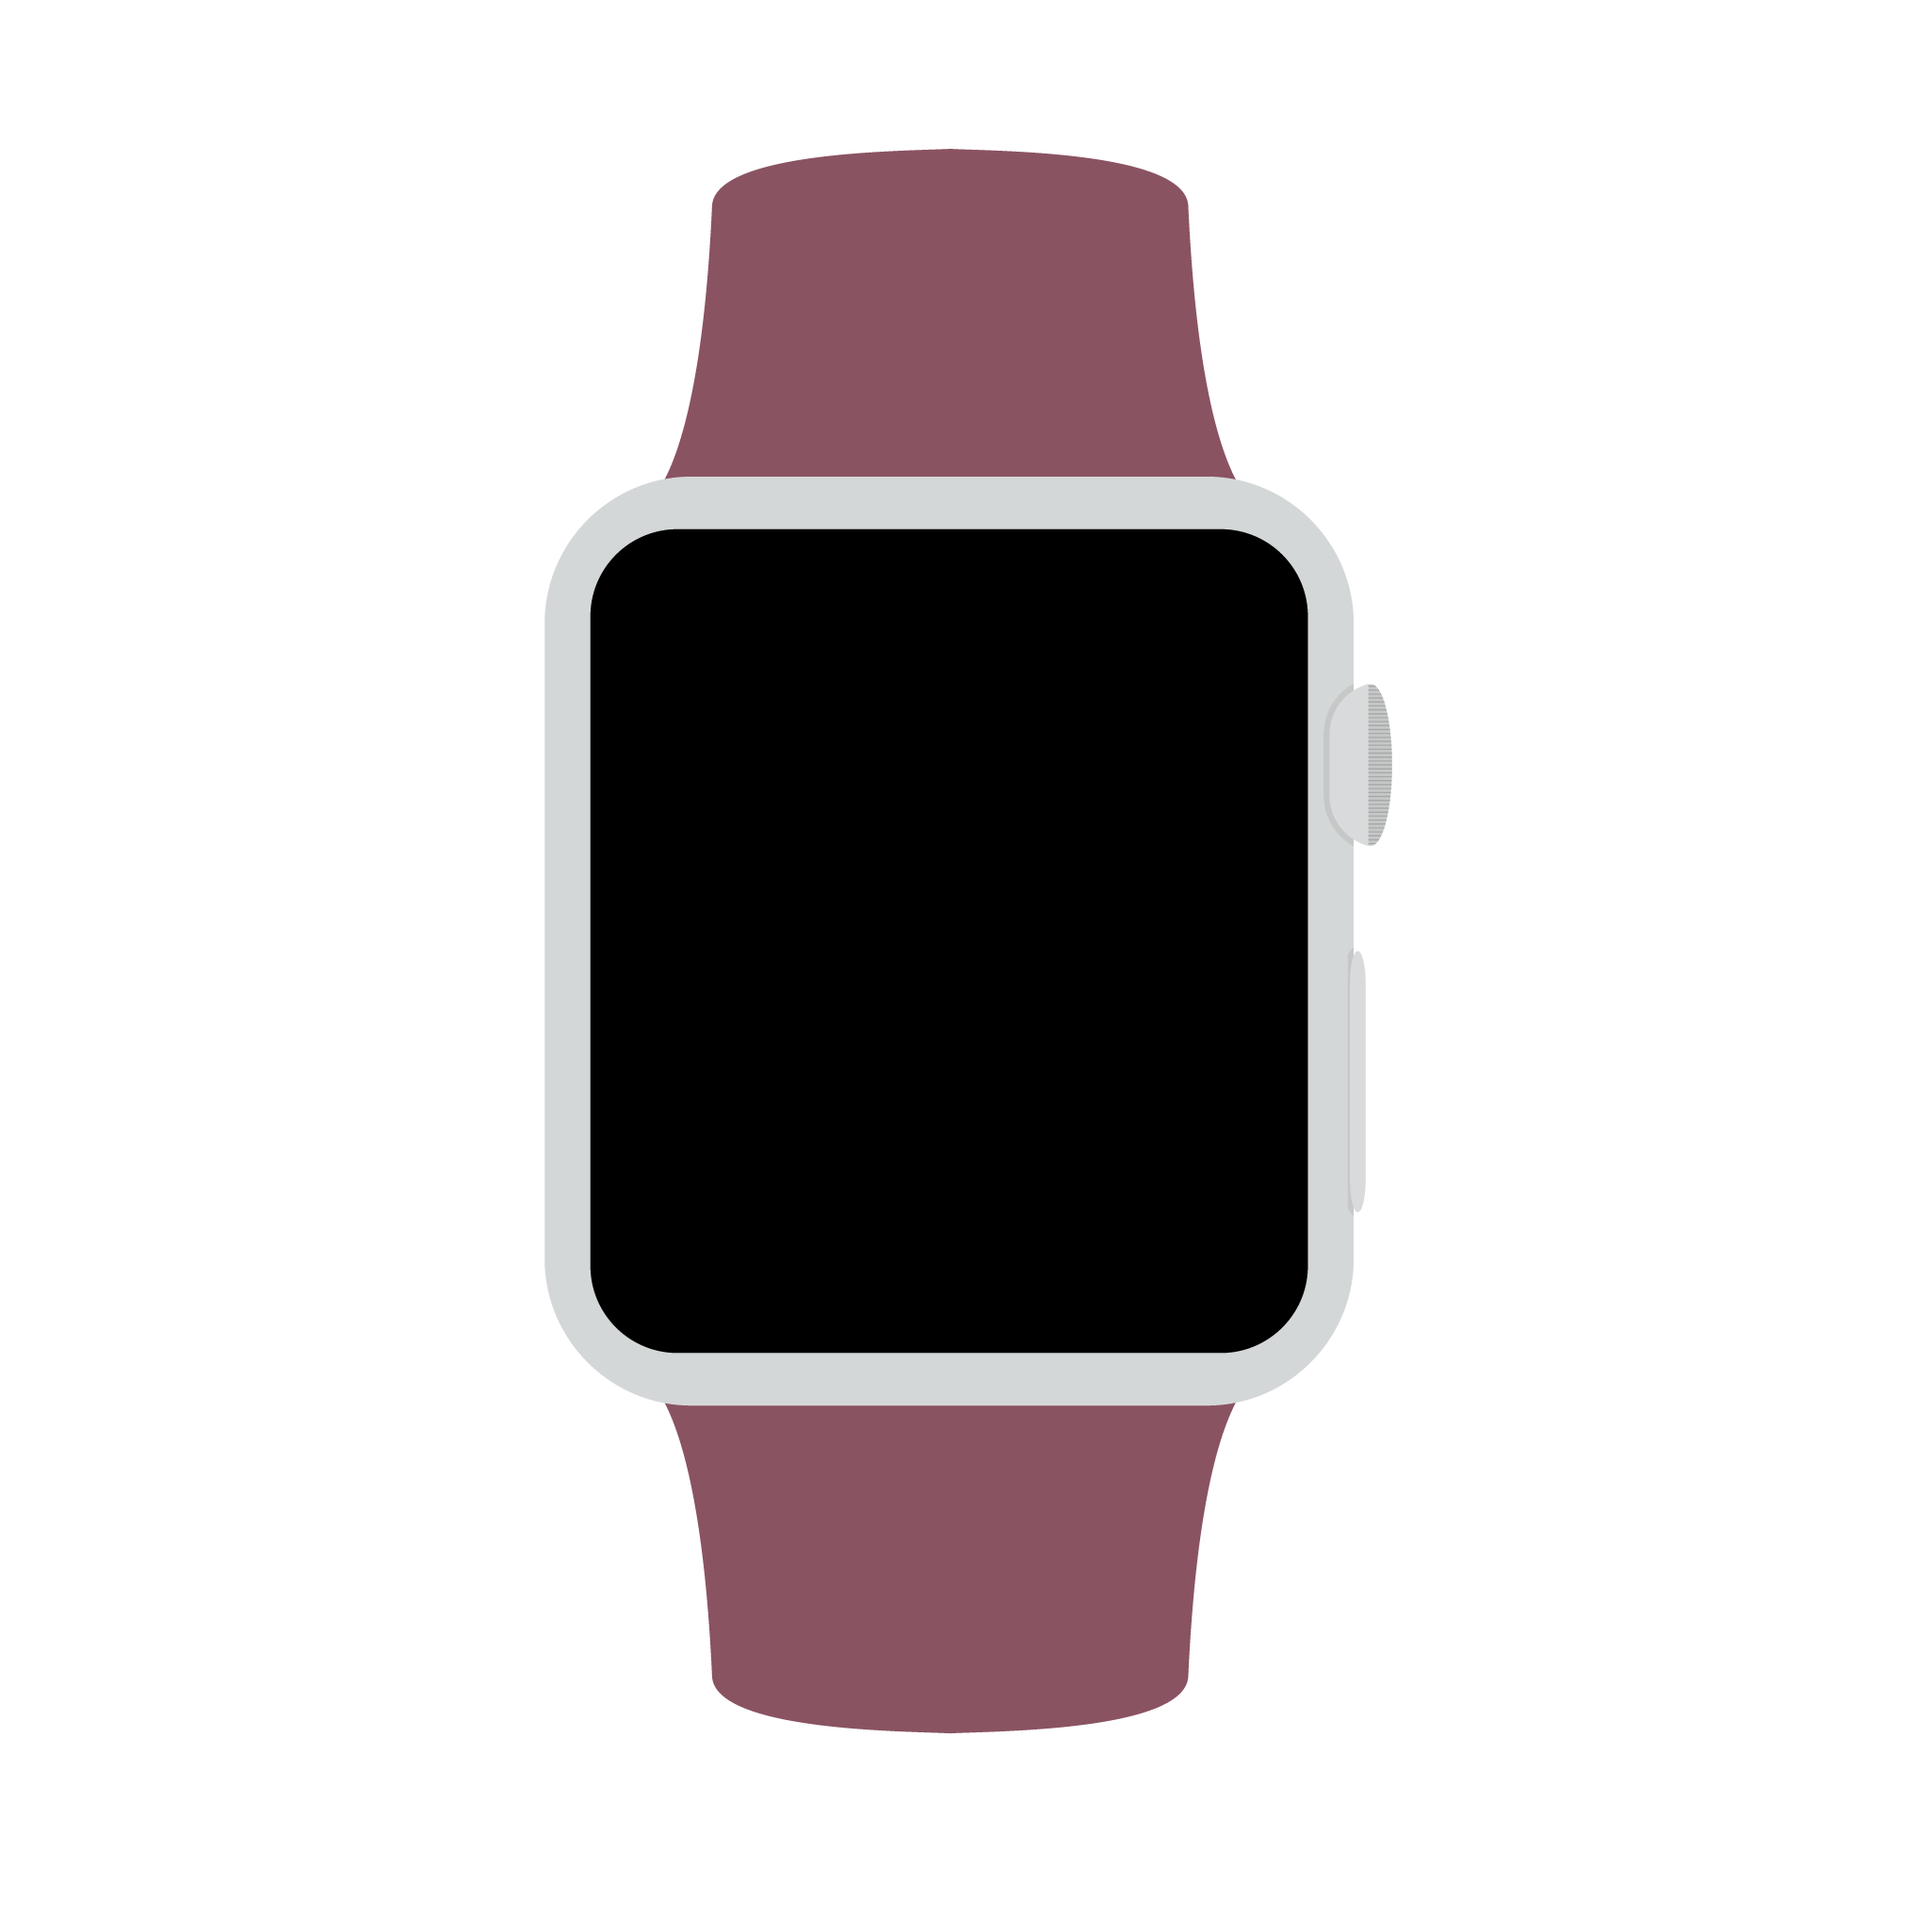 Purple watch illustration